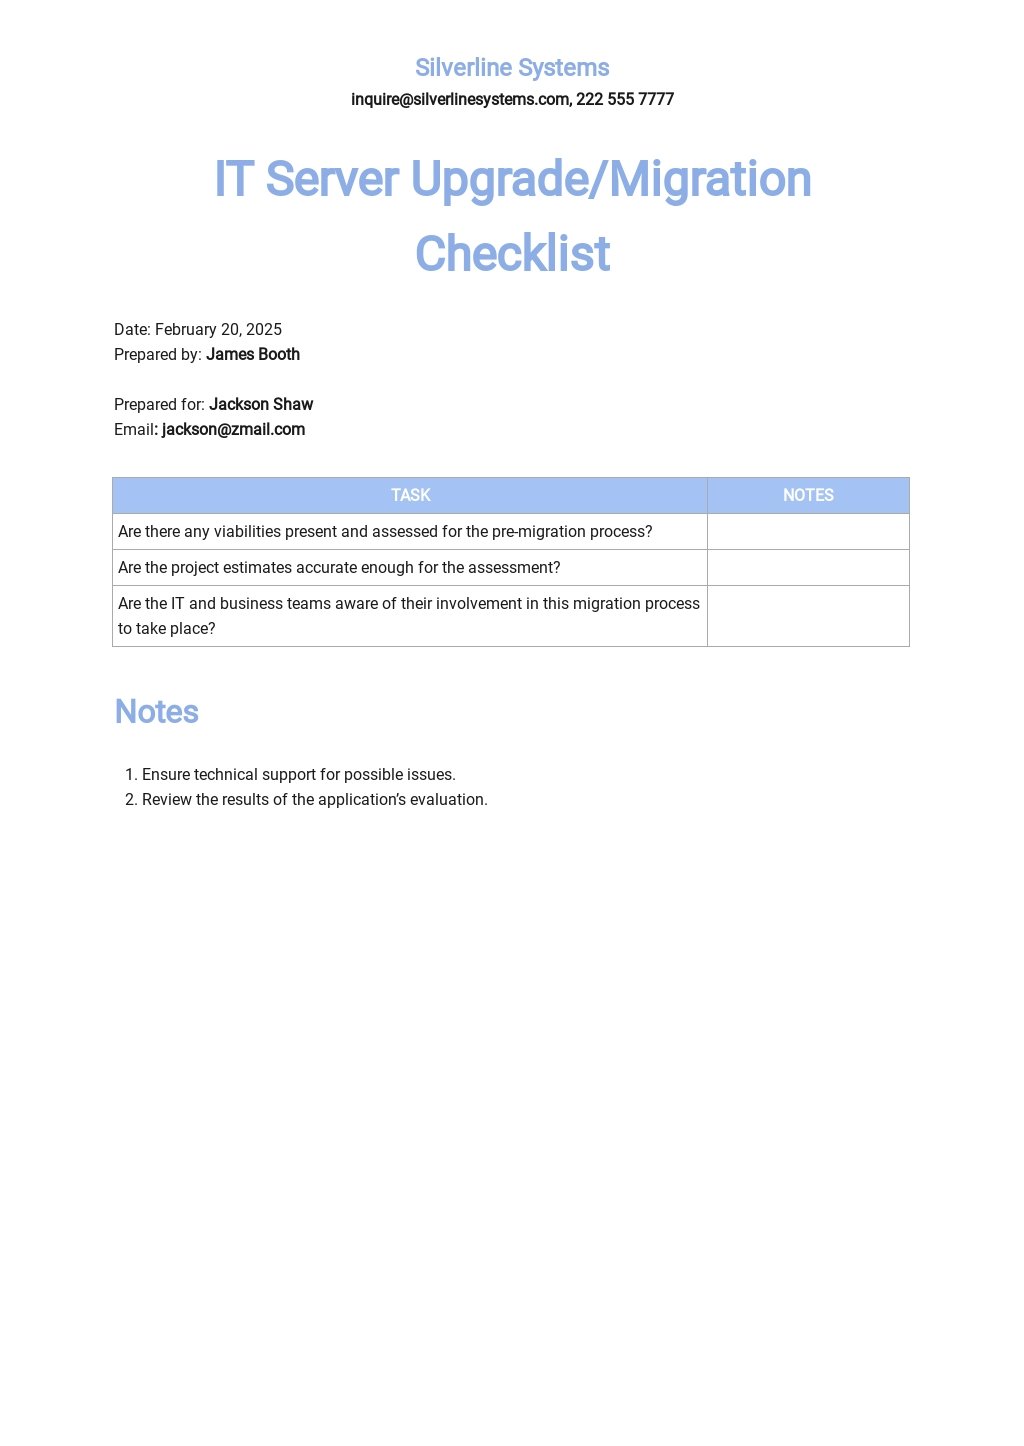 IT Server Upgrade / Migration Checklist Template Google Docs Word